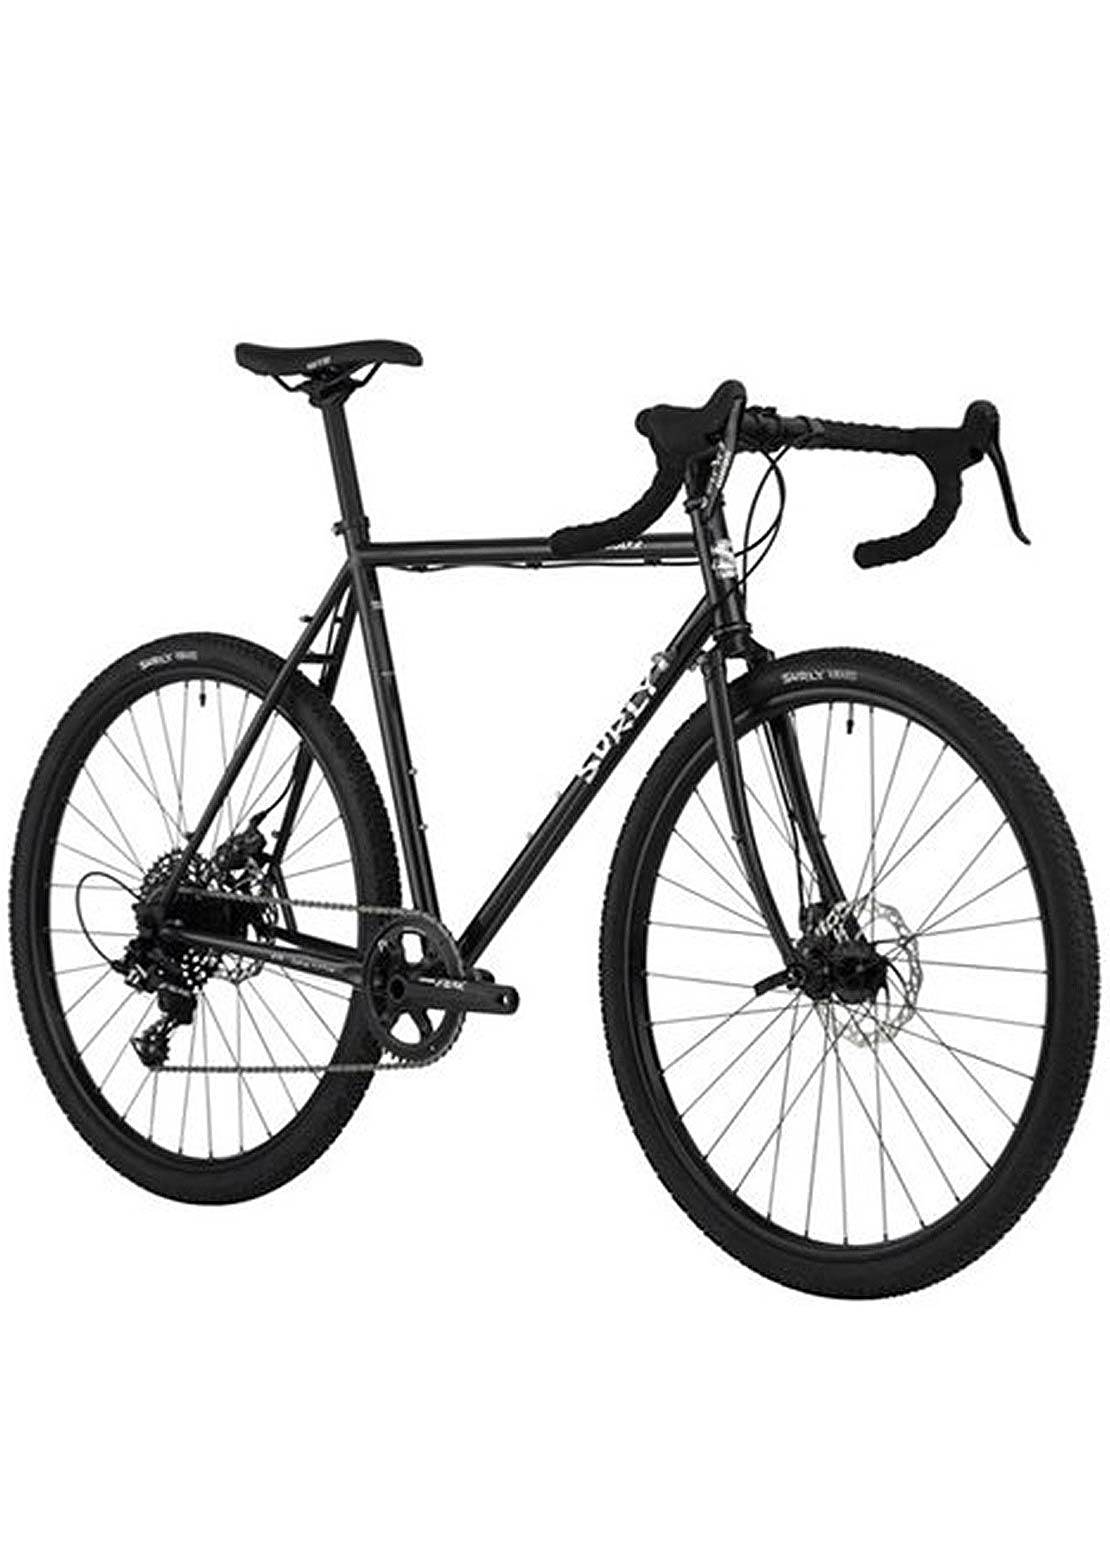 Surly Straggler Bike - 700C Black